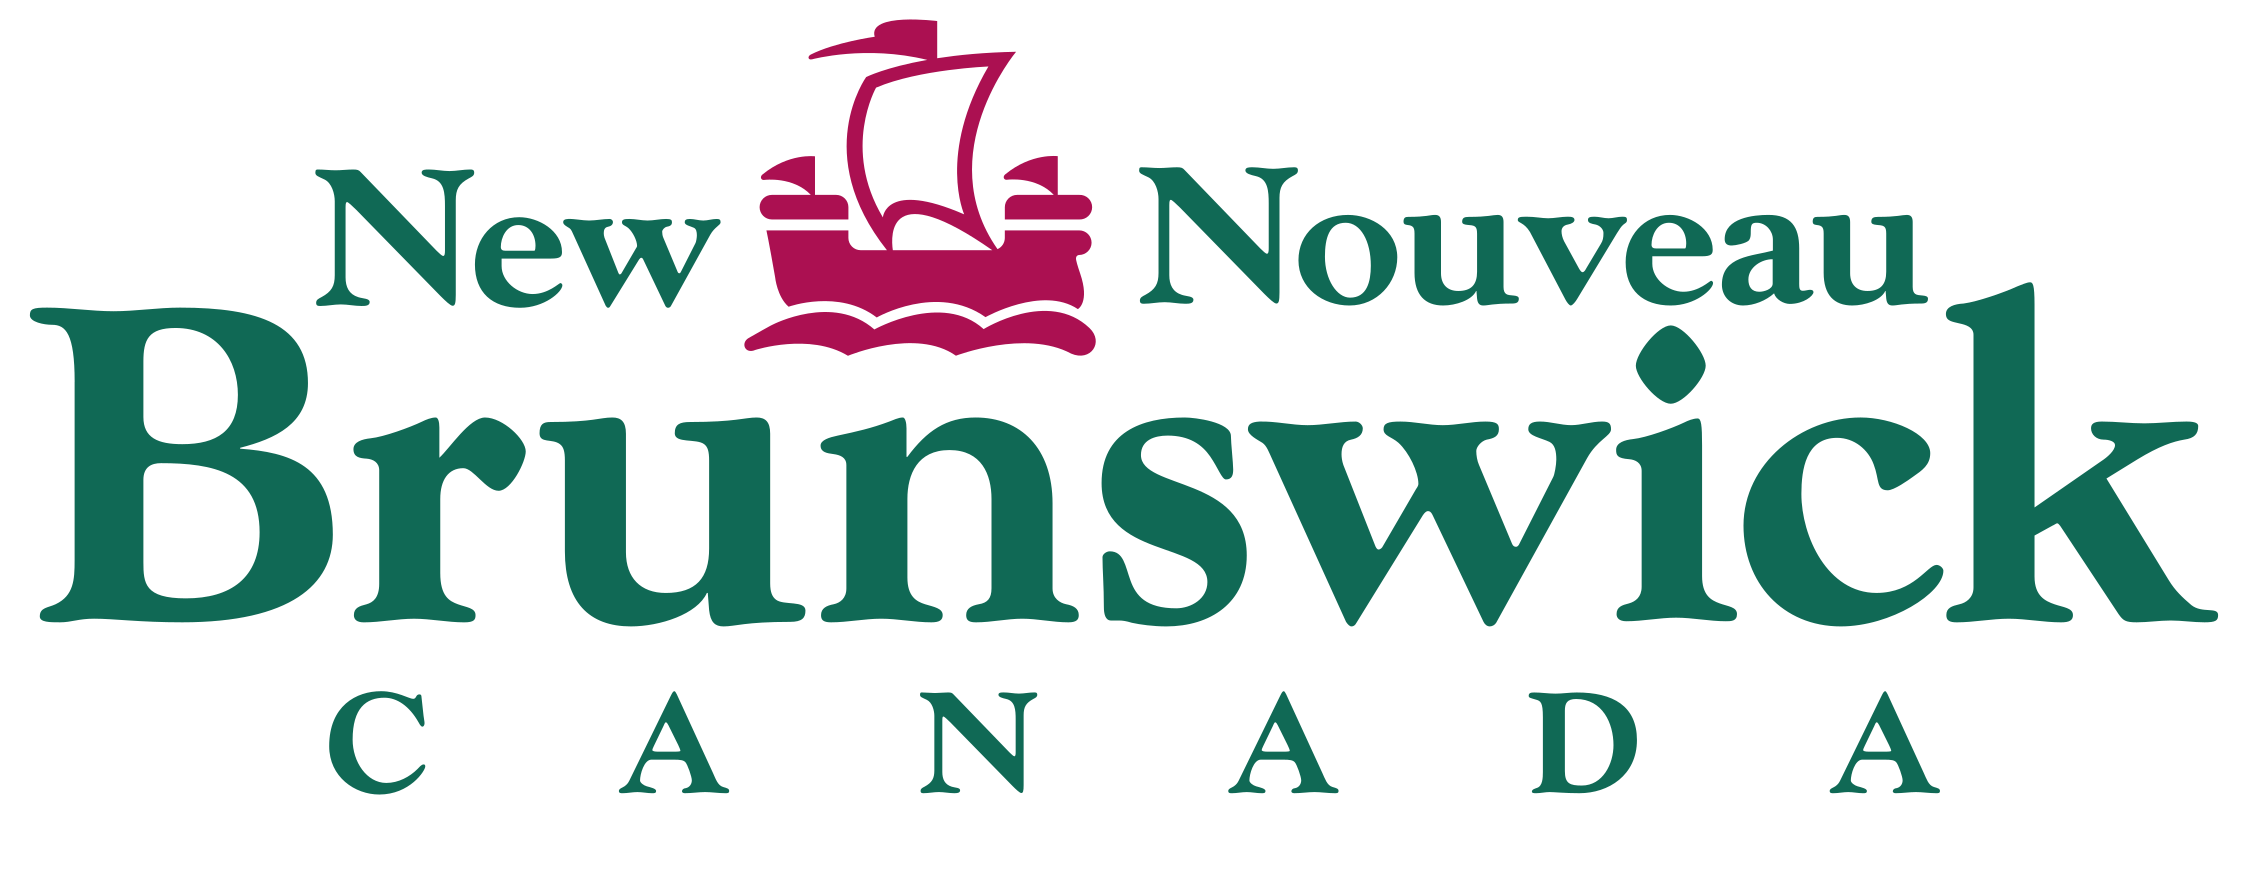 New Brunswick Canada logo